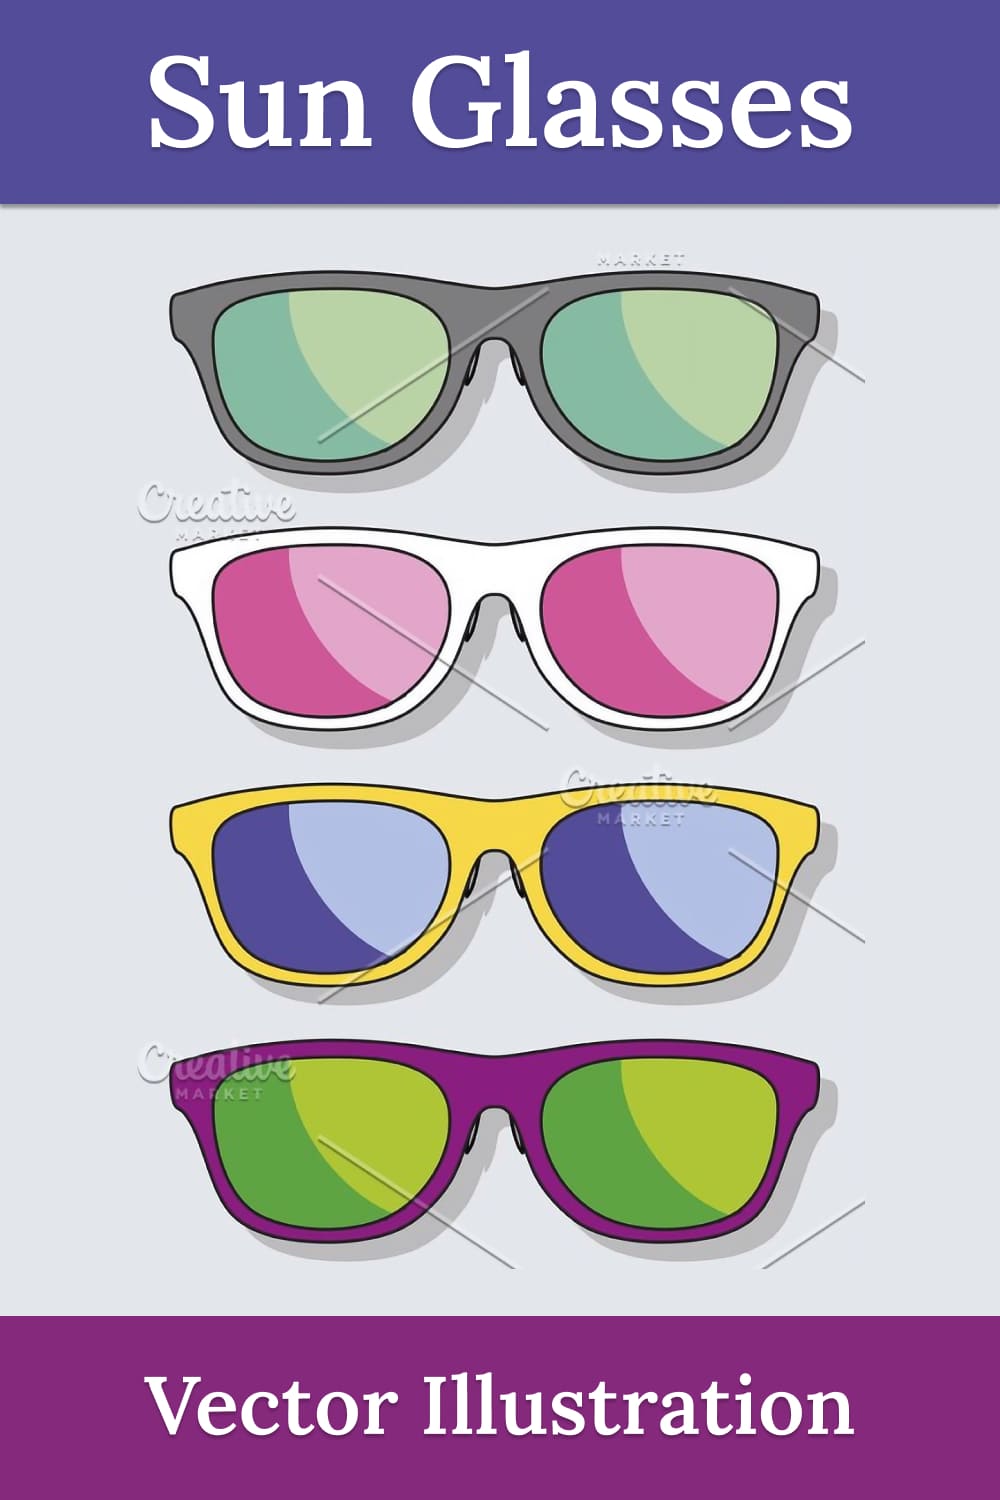 Sun glasses. Spectacles. Sunglasses, image for pinterest.